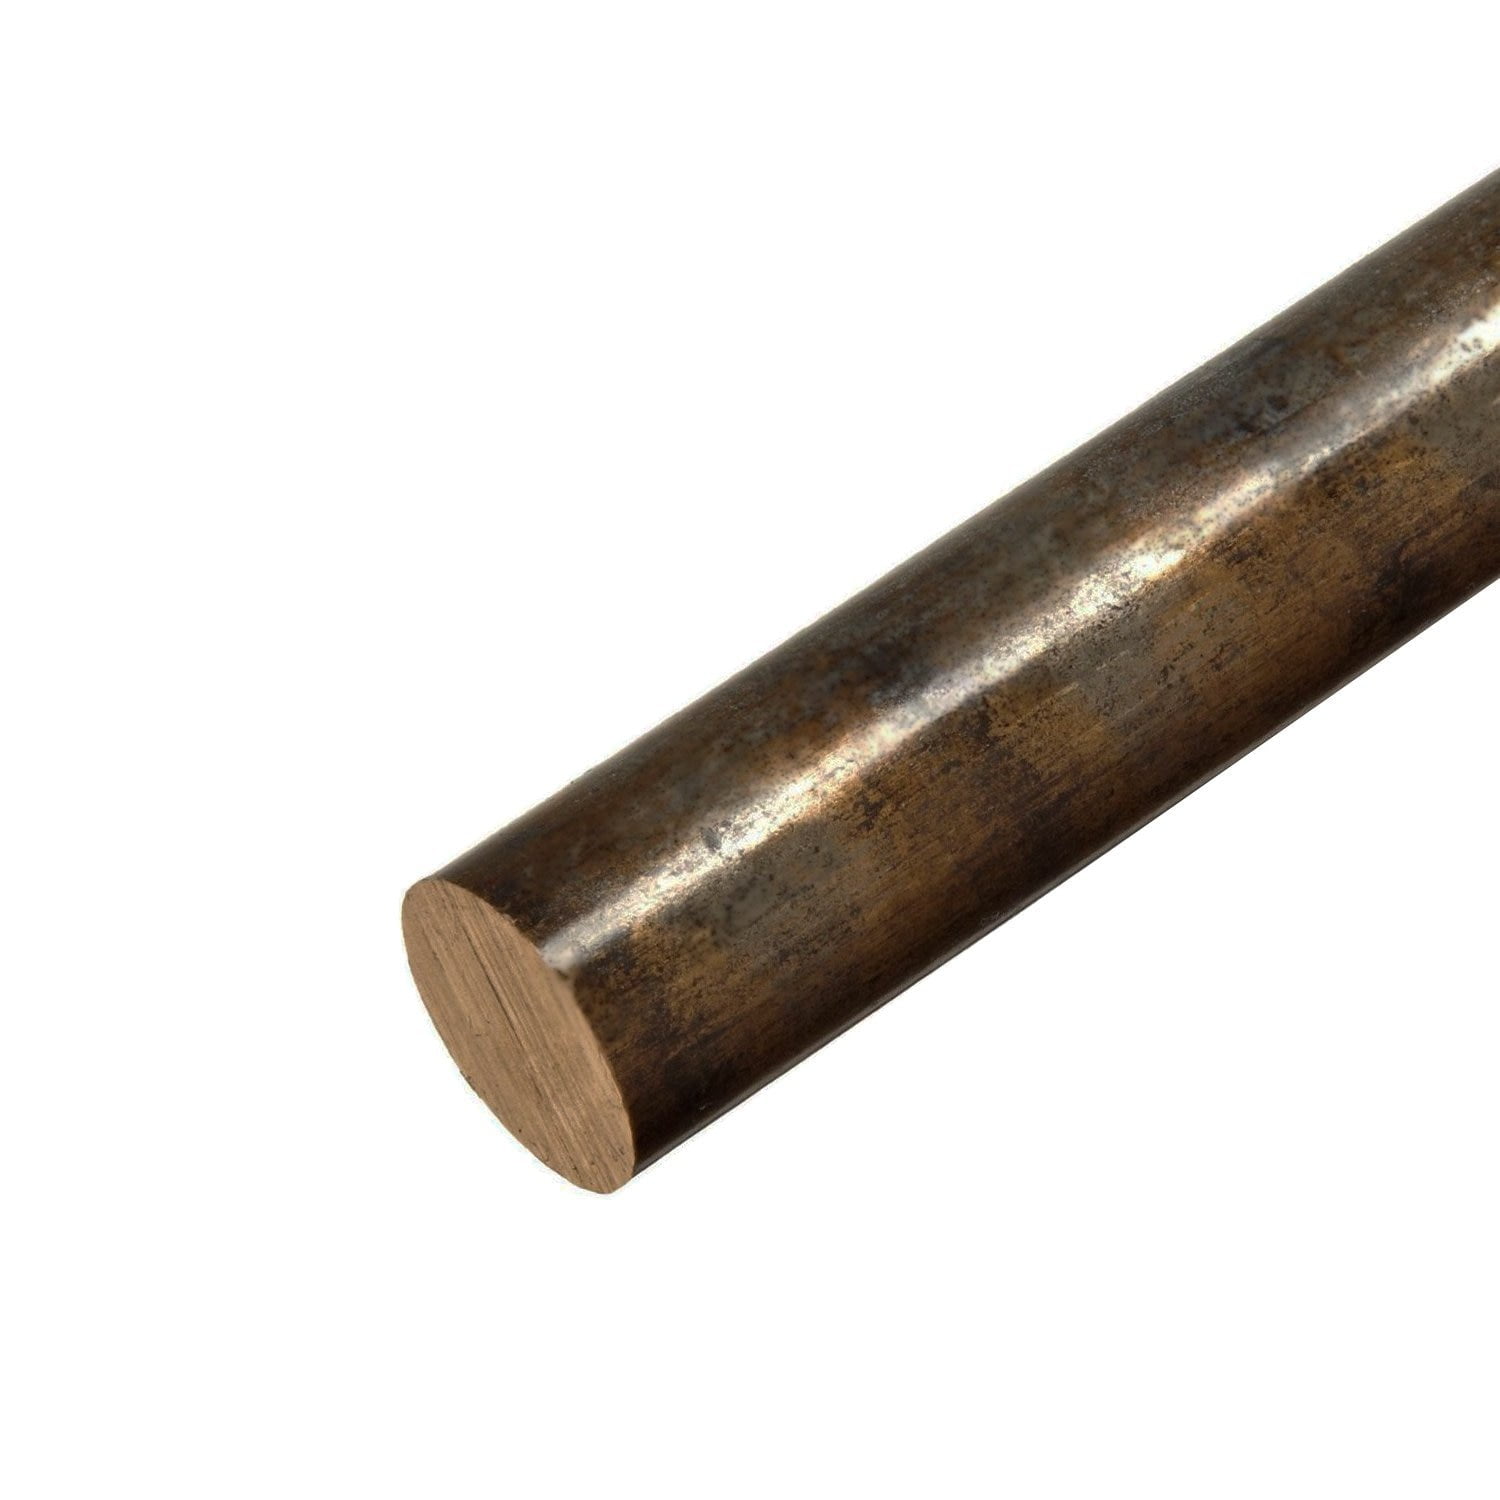 C932 Bearing Bronze Round Rod 2-1/2 inch x 12 inches 2.500